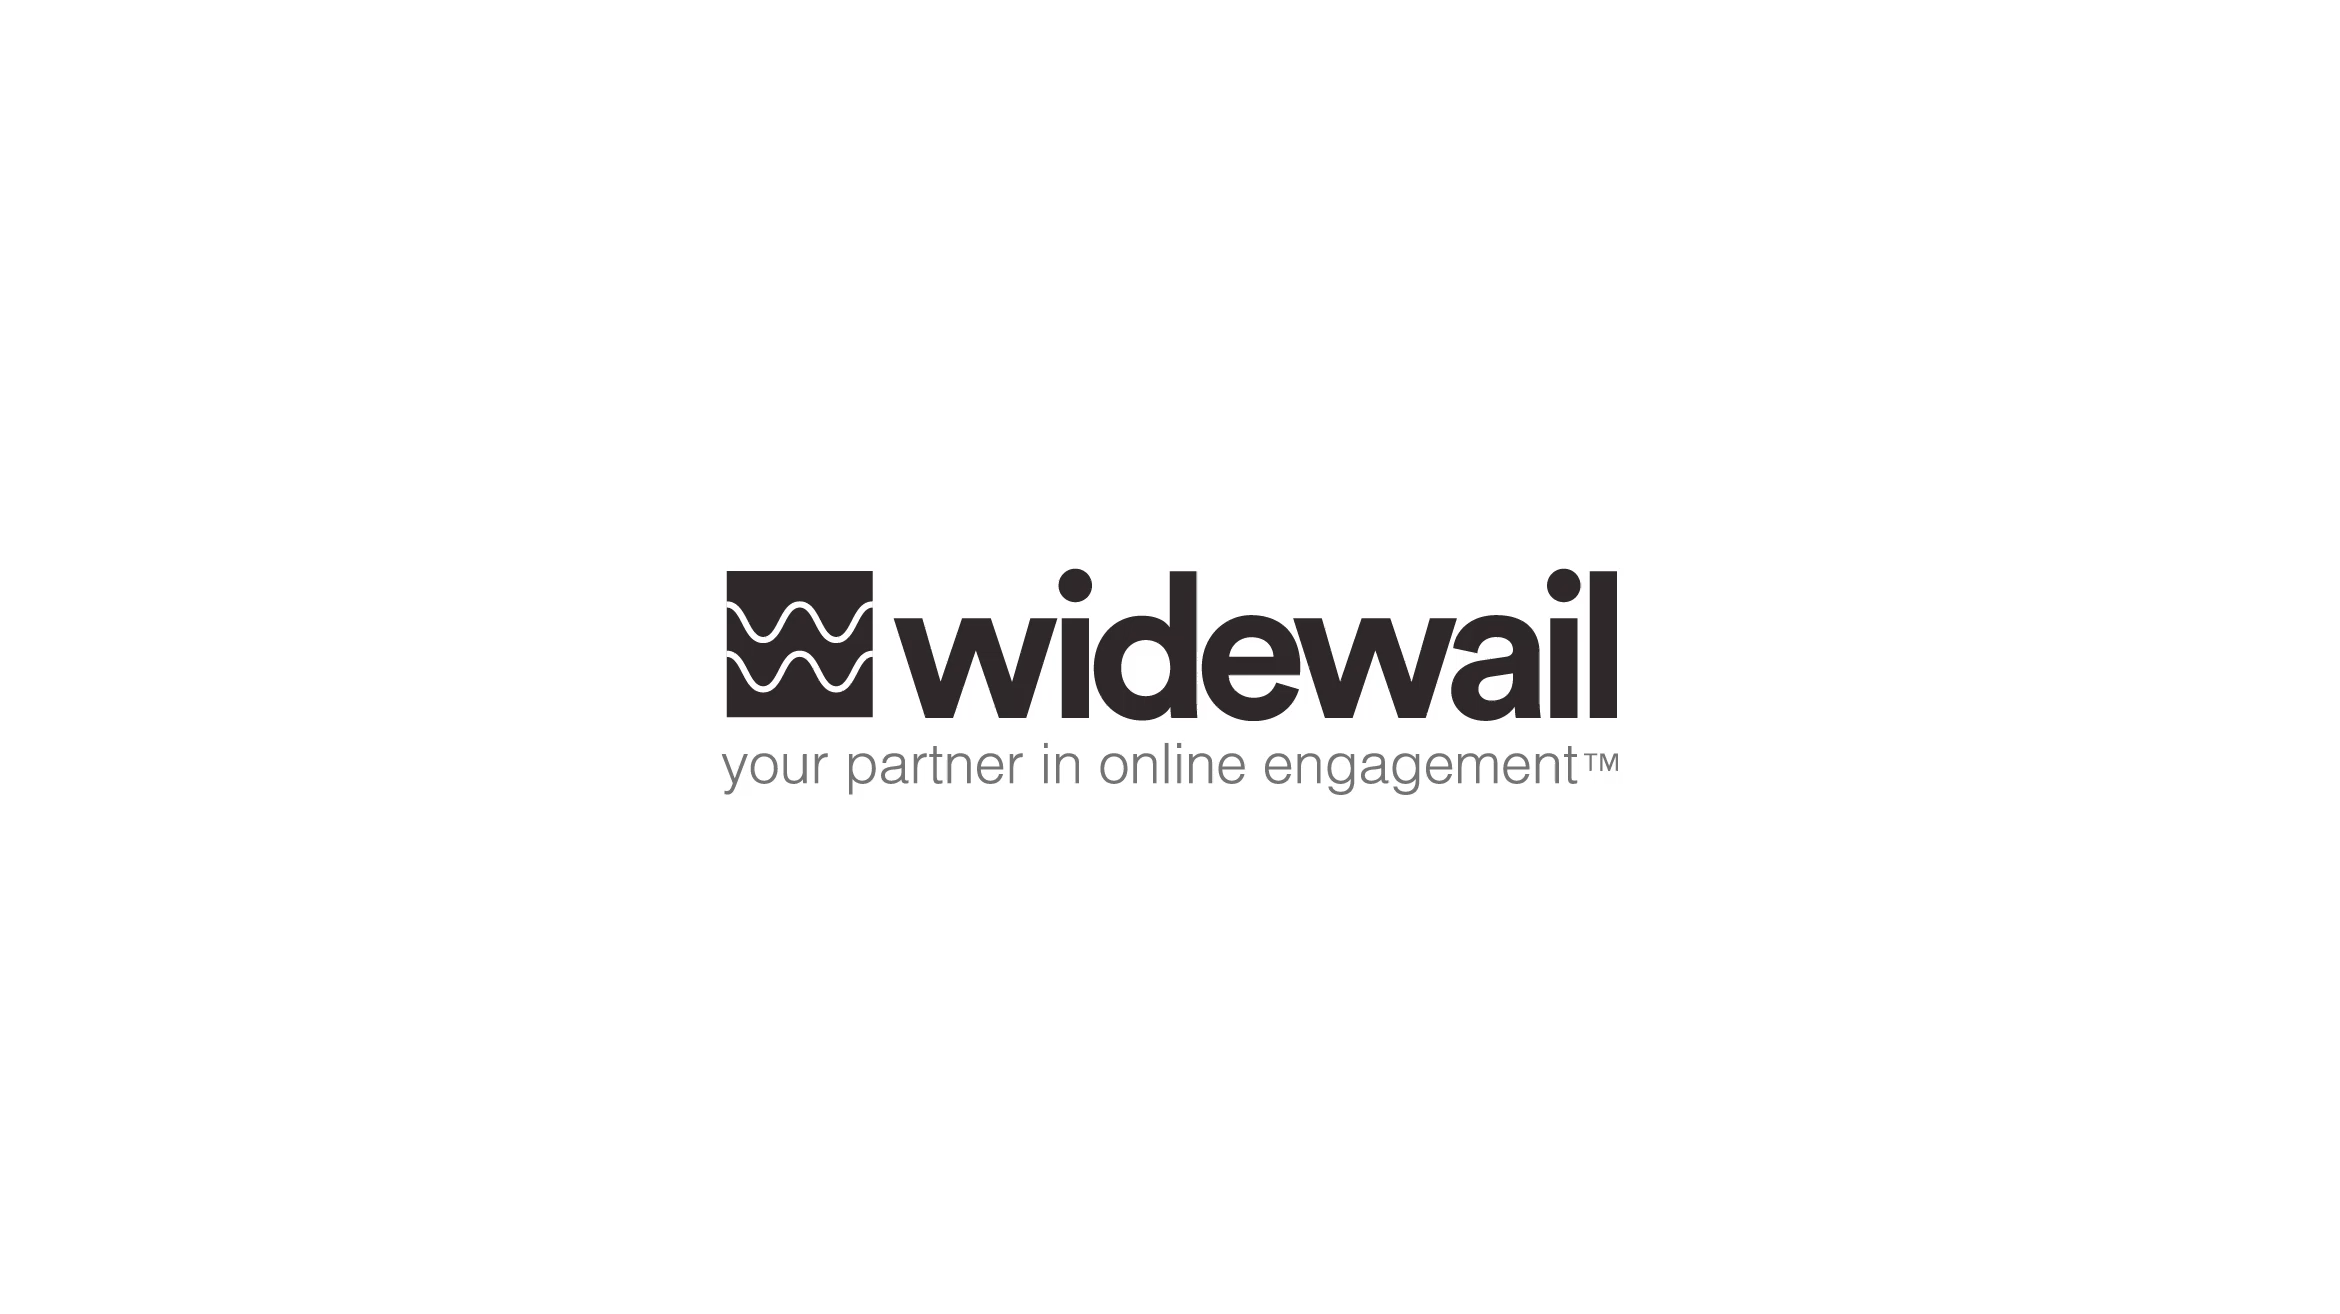 Widewail_LogoAnimation_Tagline